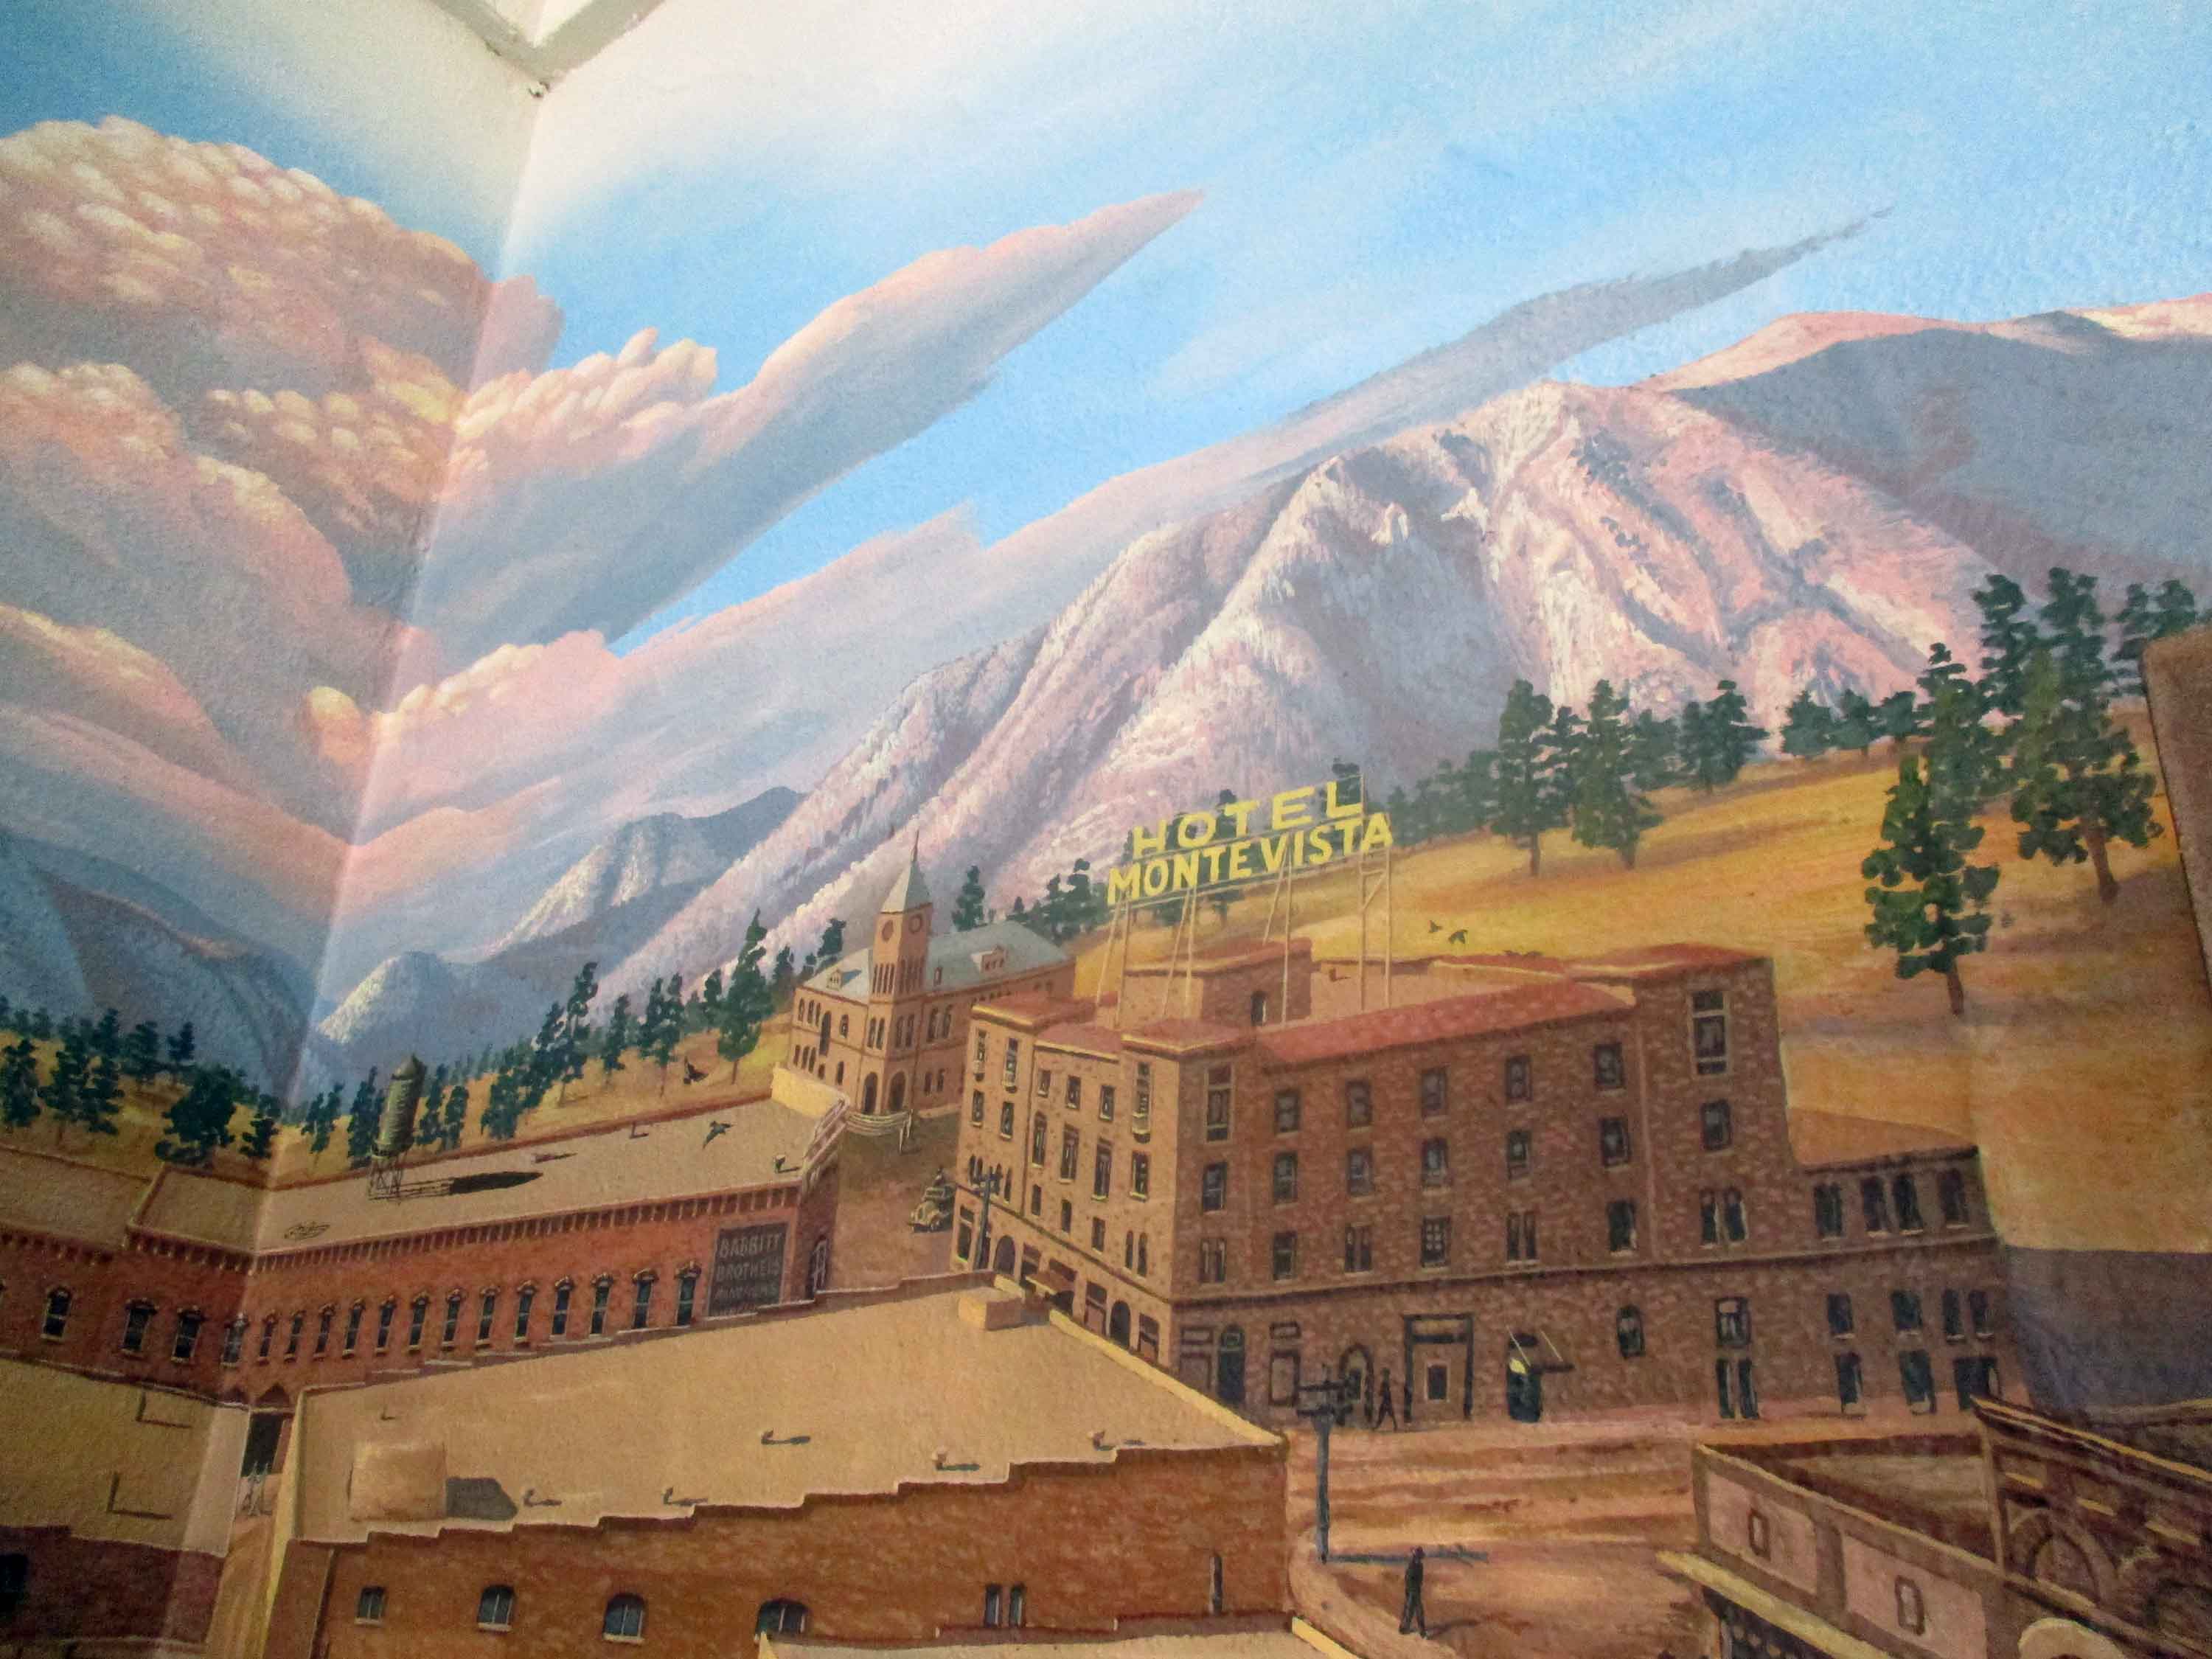 Flagstaff Visitor Center Mural 68